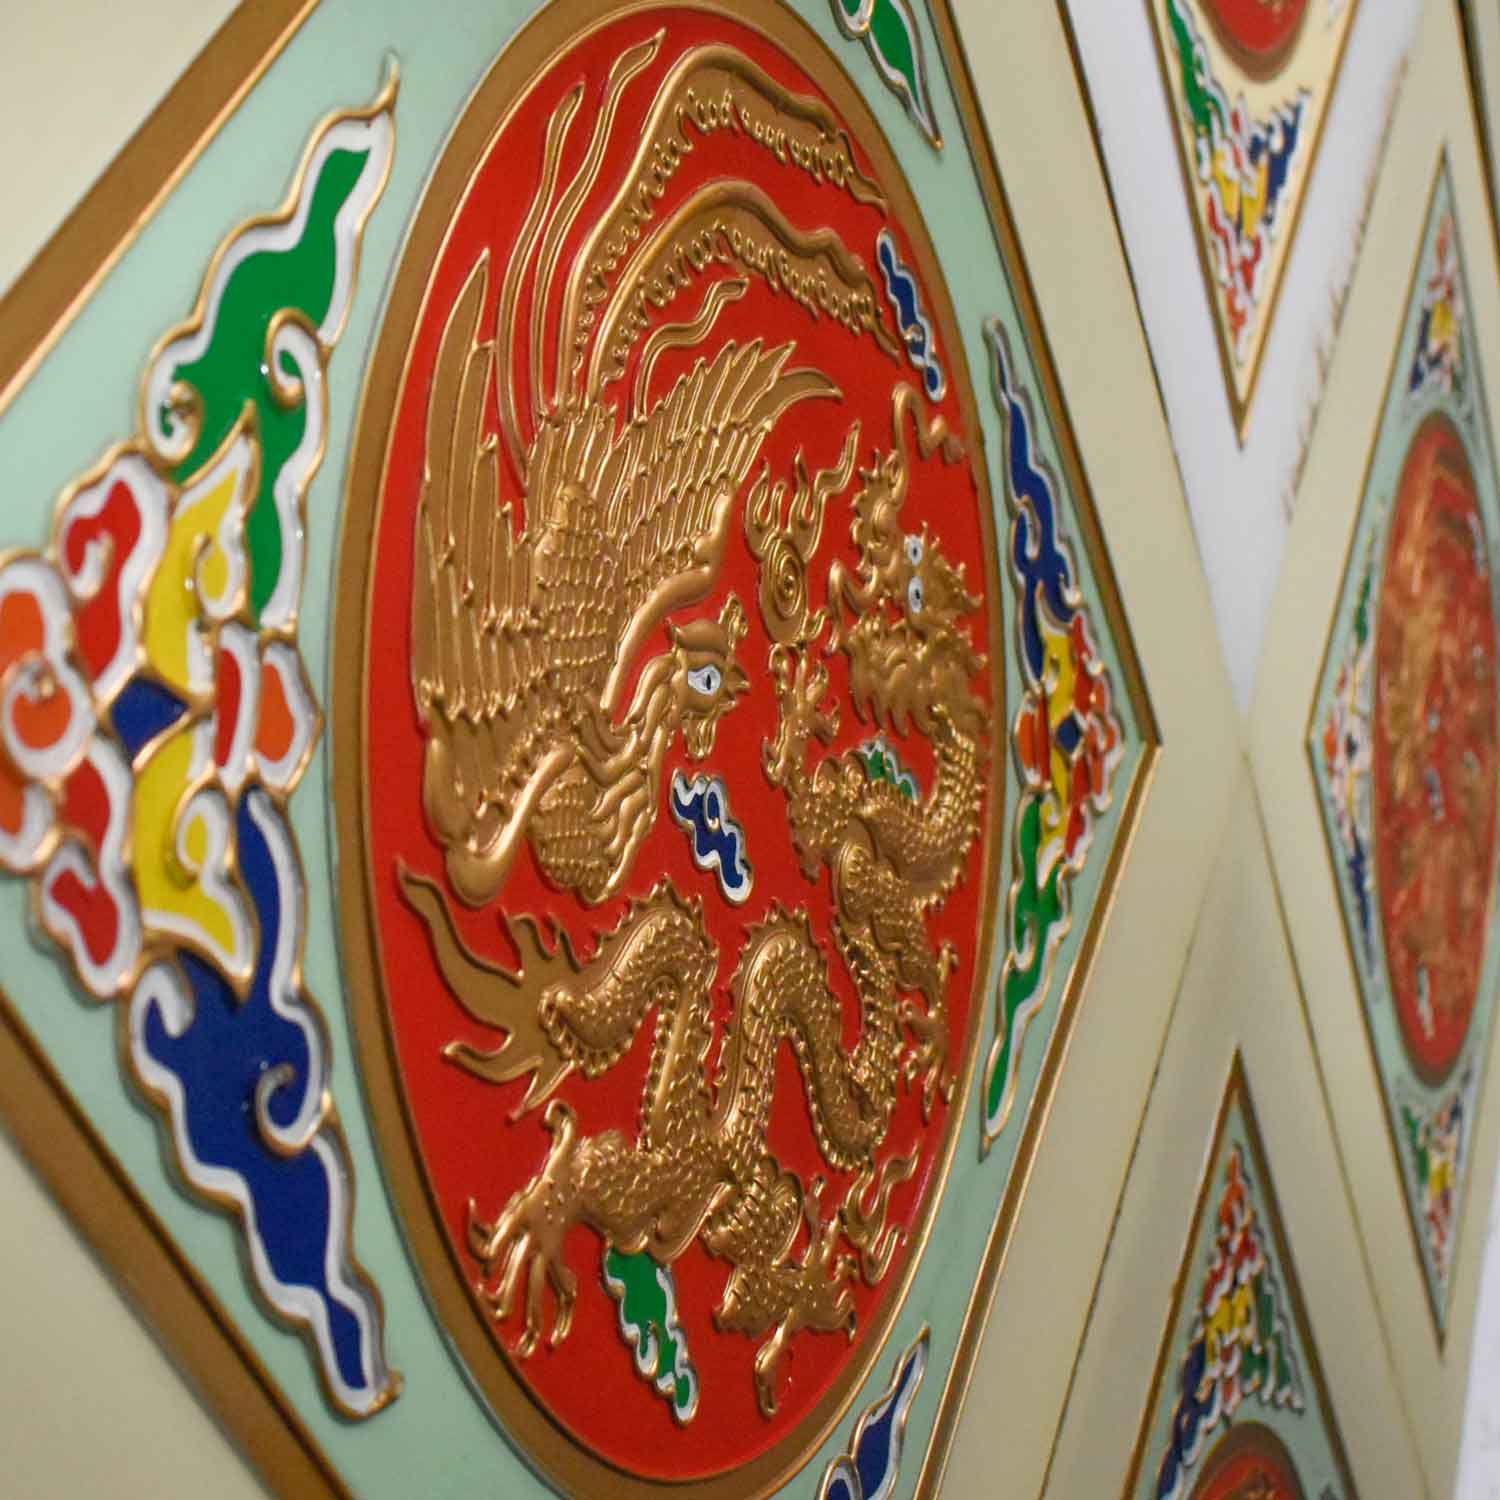 Vintage Asian Drop Ceiling Panels Hand Painted Embossed set of 18